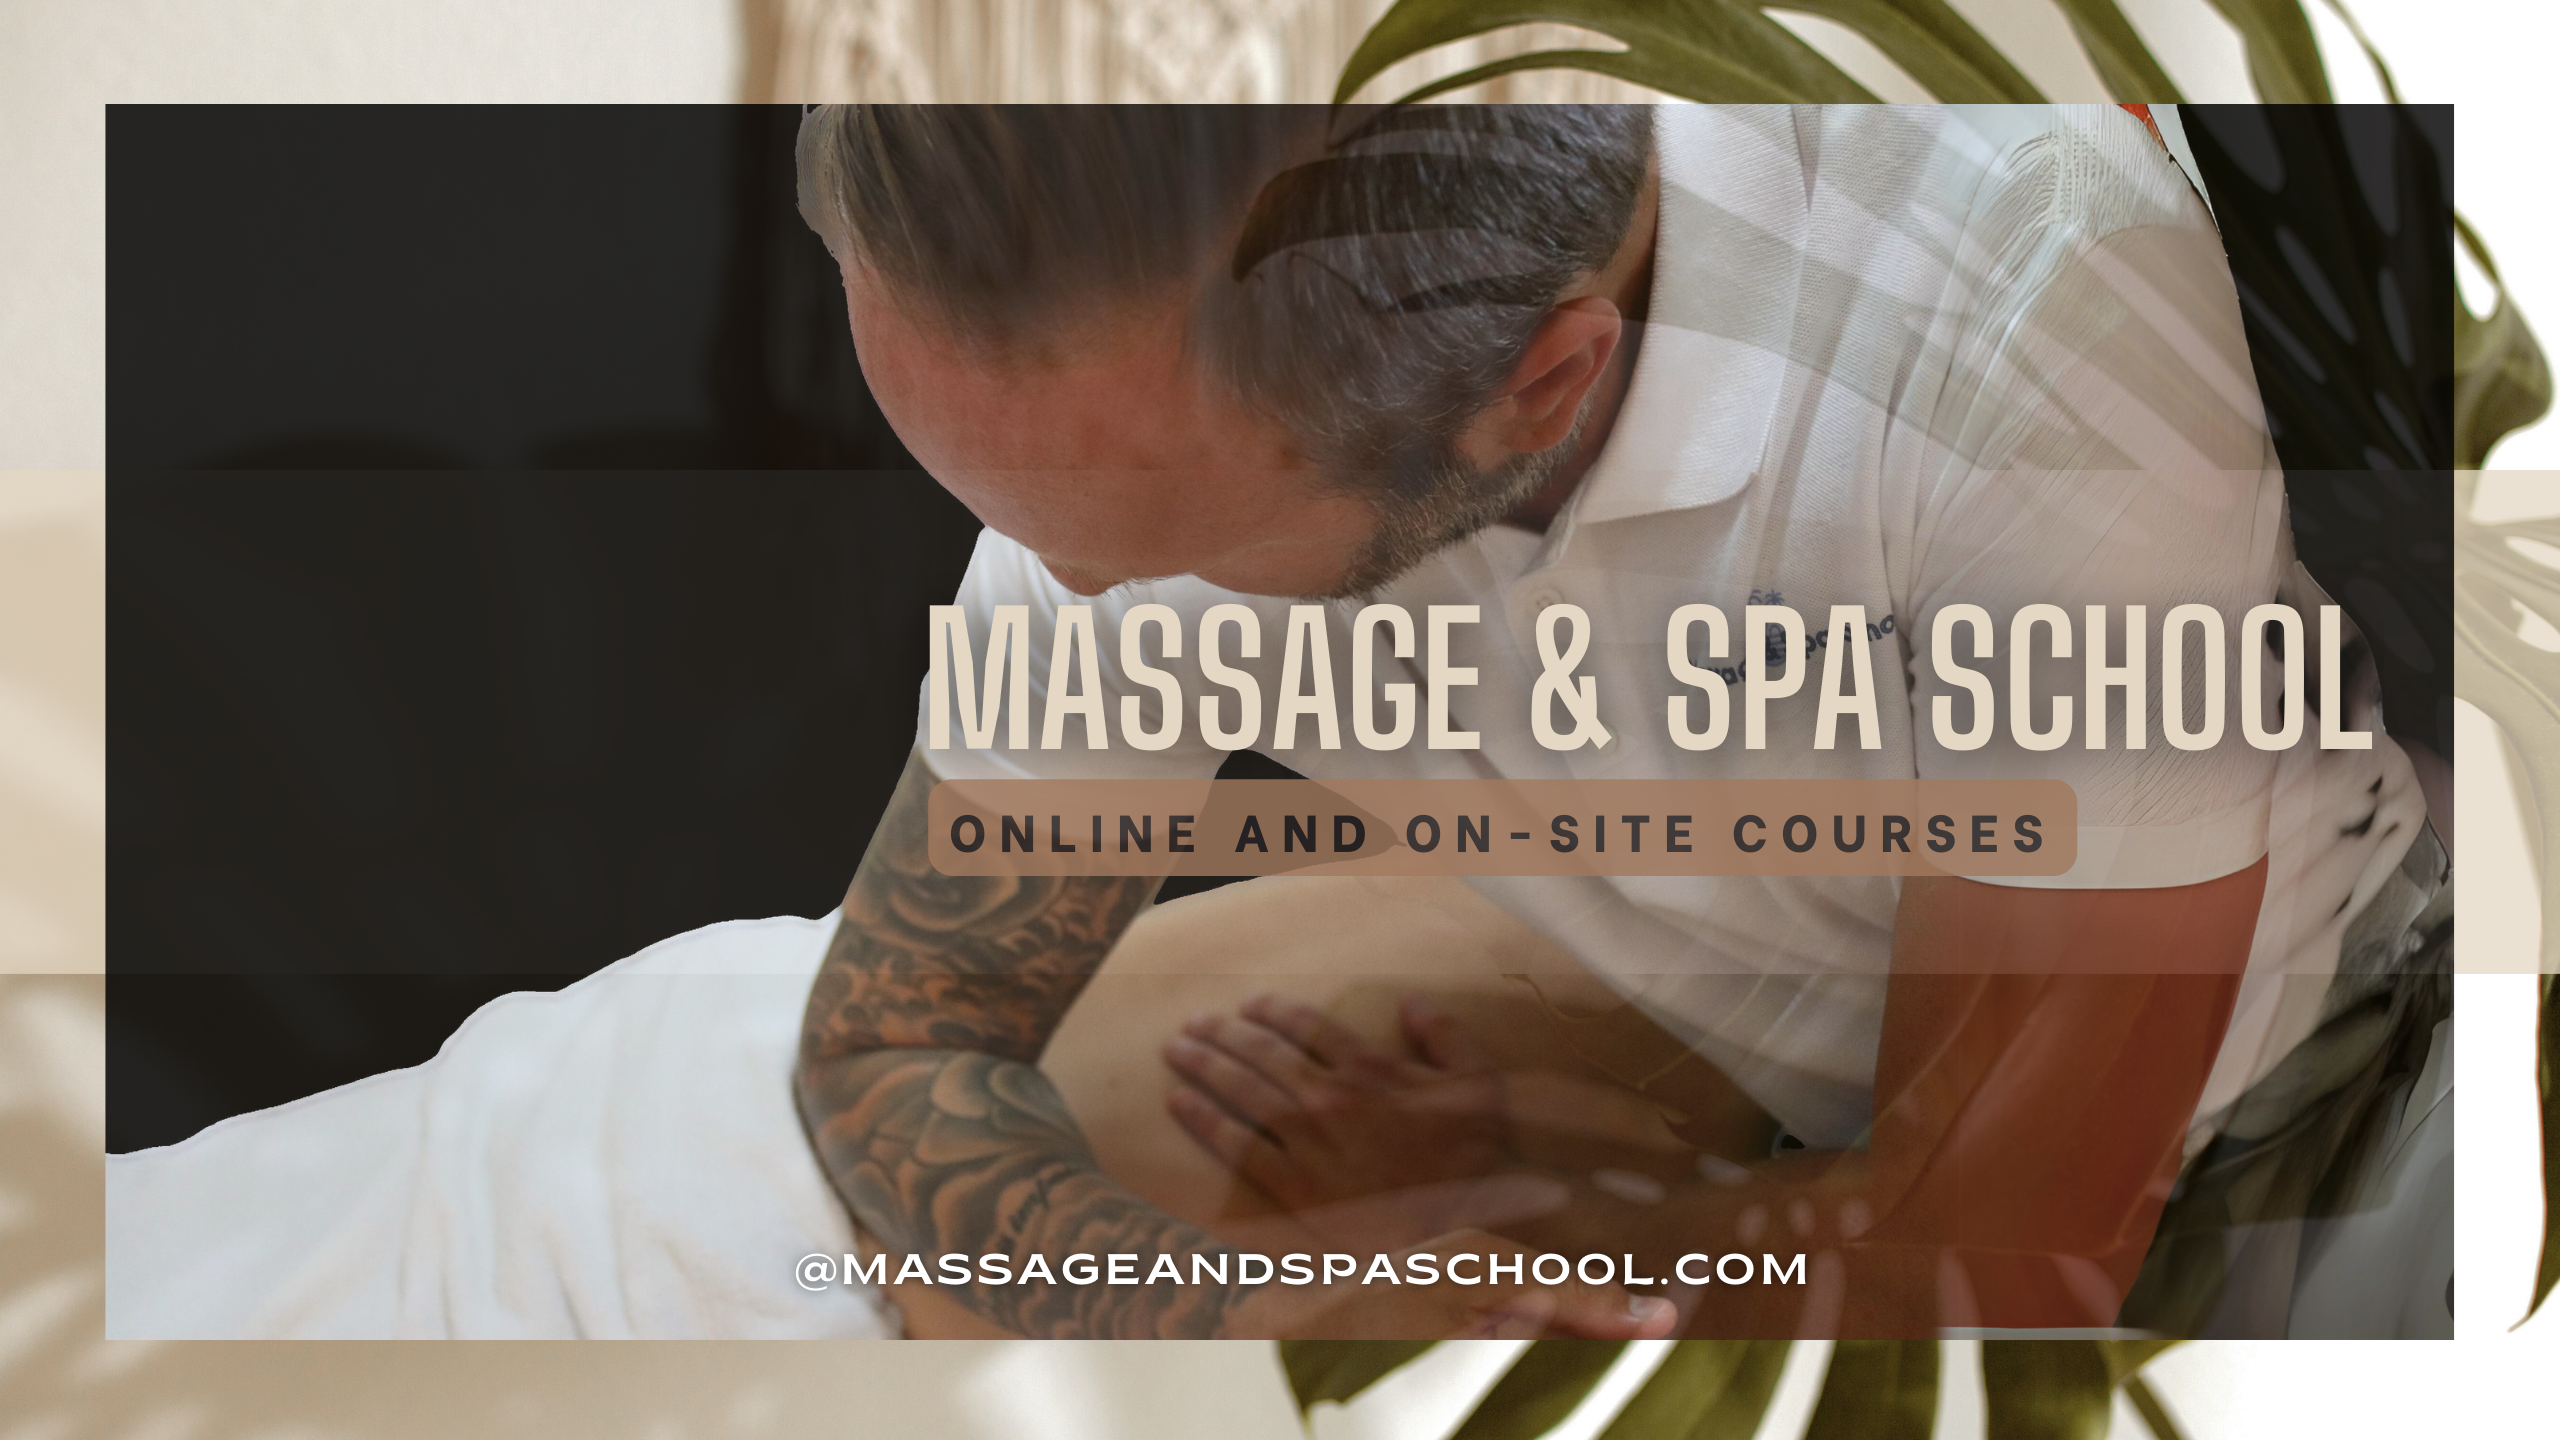 Massage & Spa School